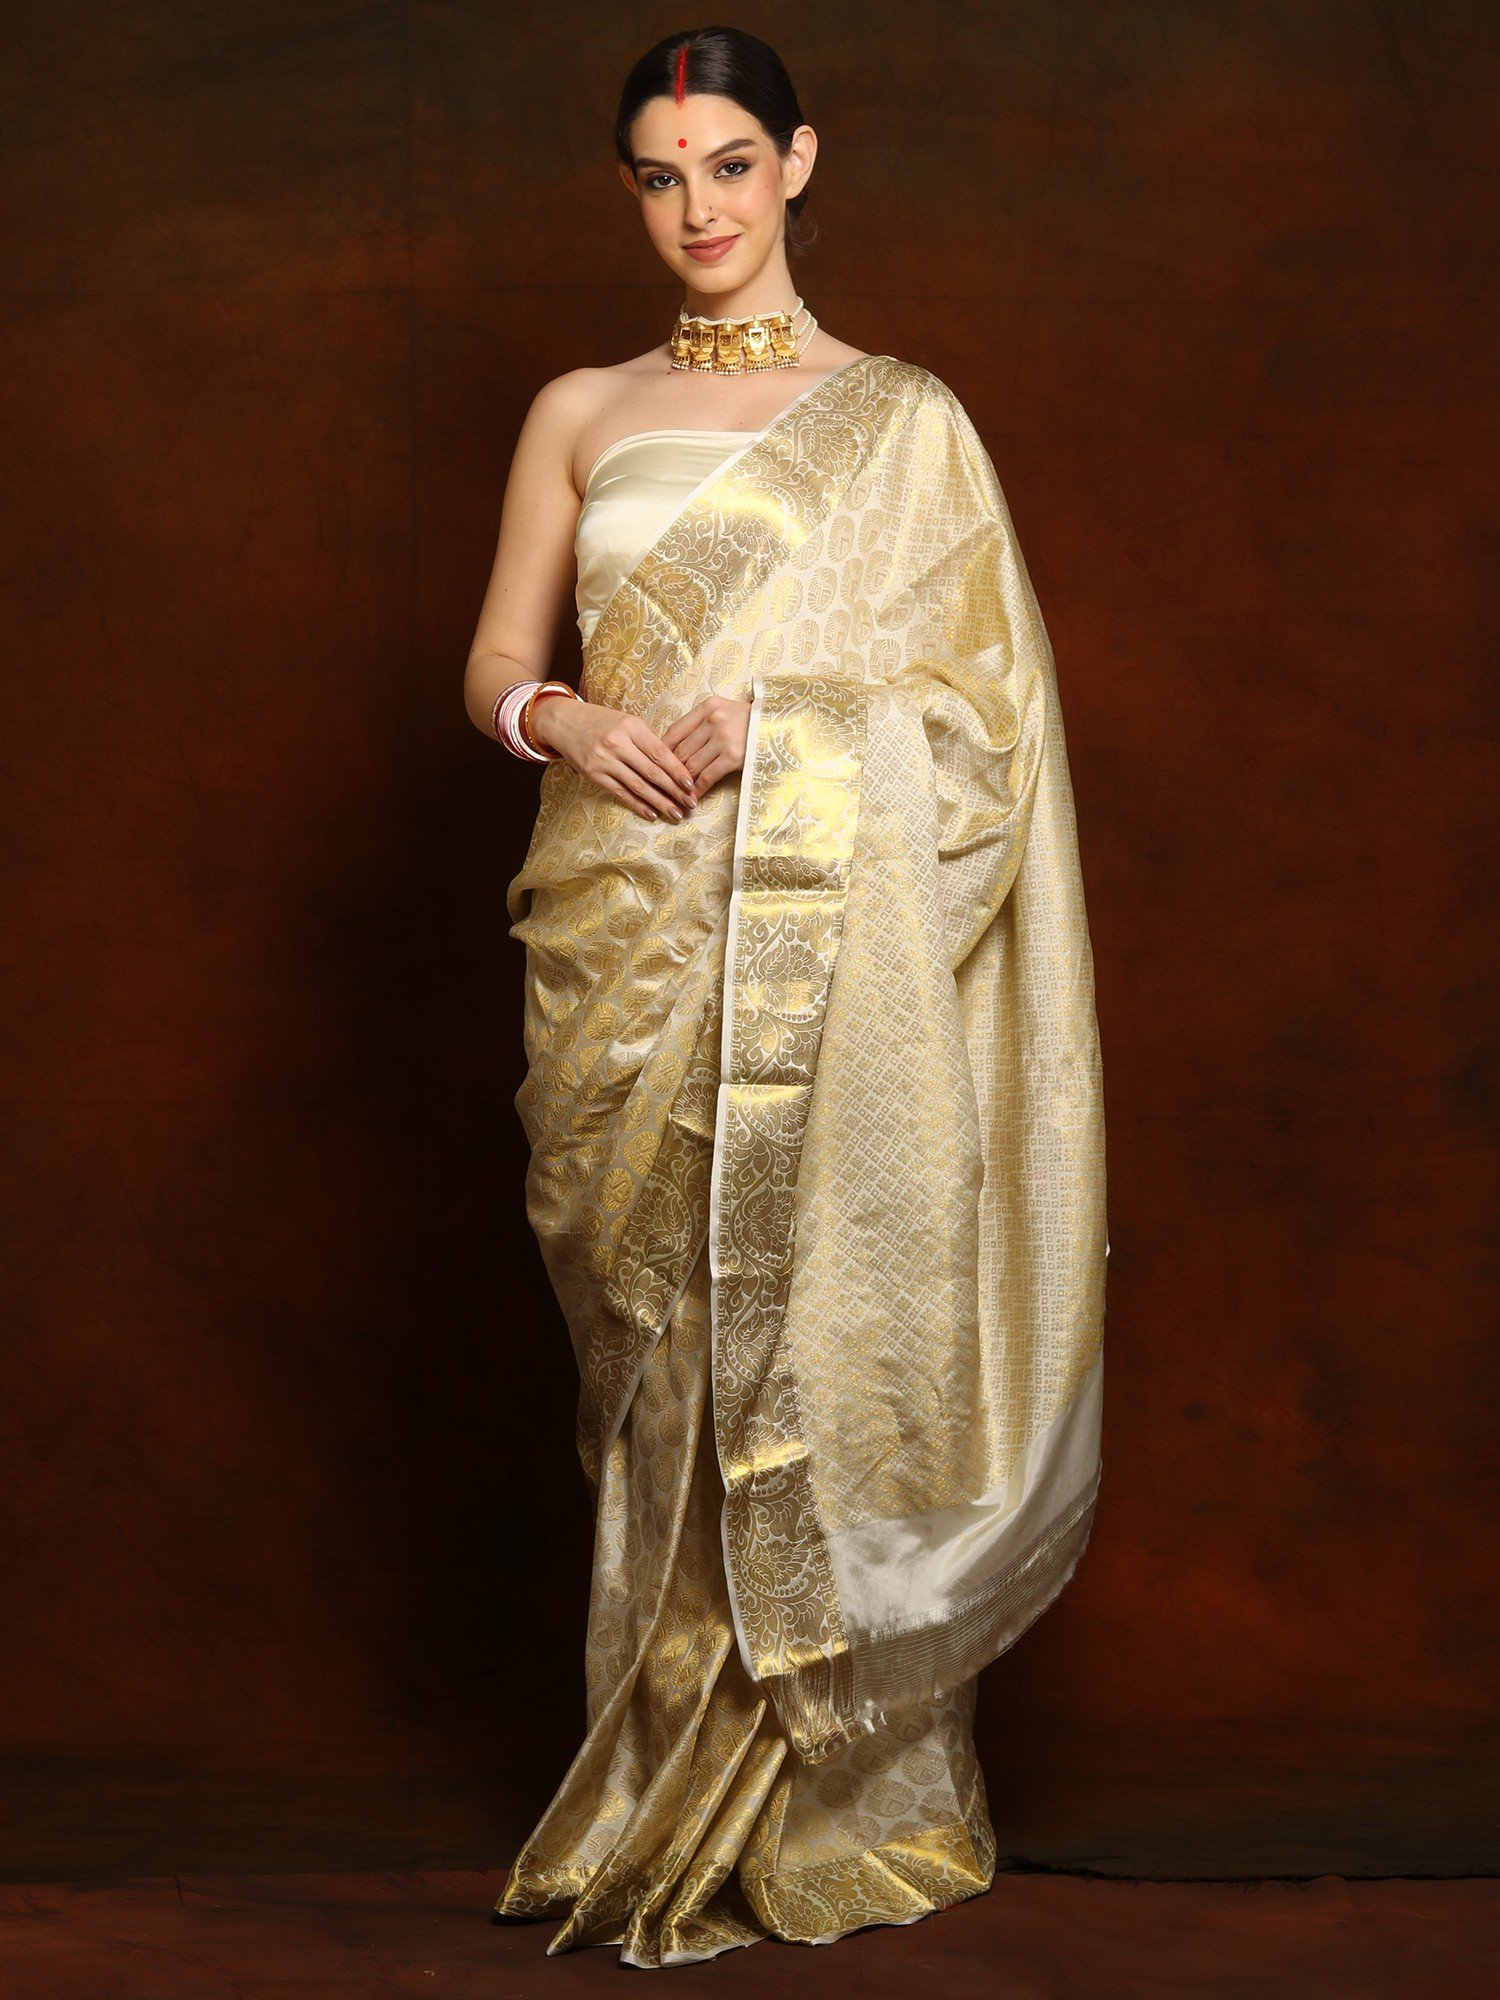 India Dress Classic Embroidered Hatha Yoga Meditation Ethnic Blouse Cotton  White Indian Women Kurti Dresses Clothing Clothes